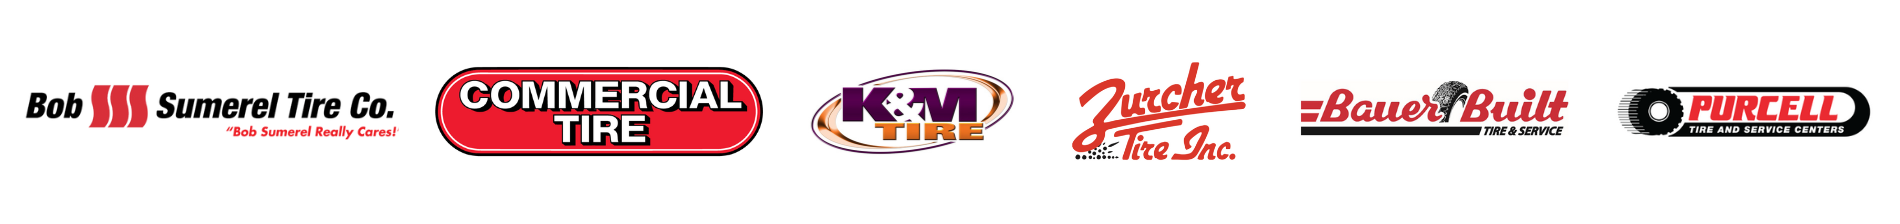 Commercial Tire Distributors that use Voze